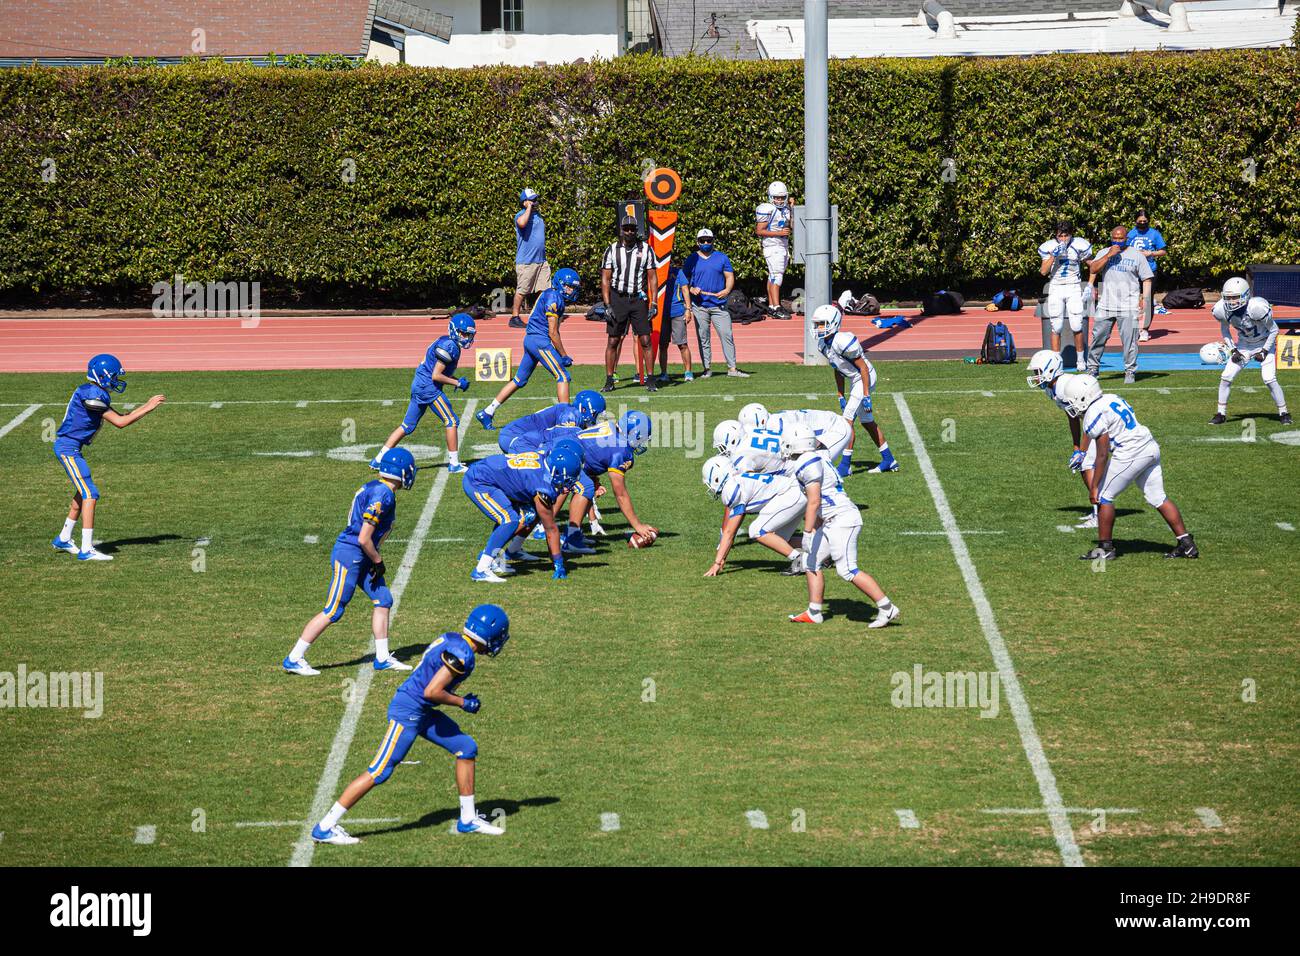 High School Football Spiel, La Puente, Kalifornien, USA Stockfoto